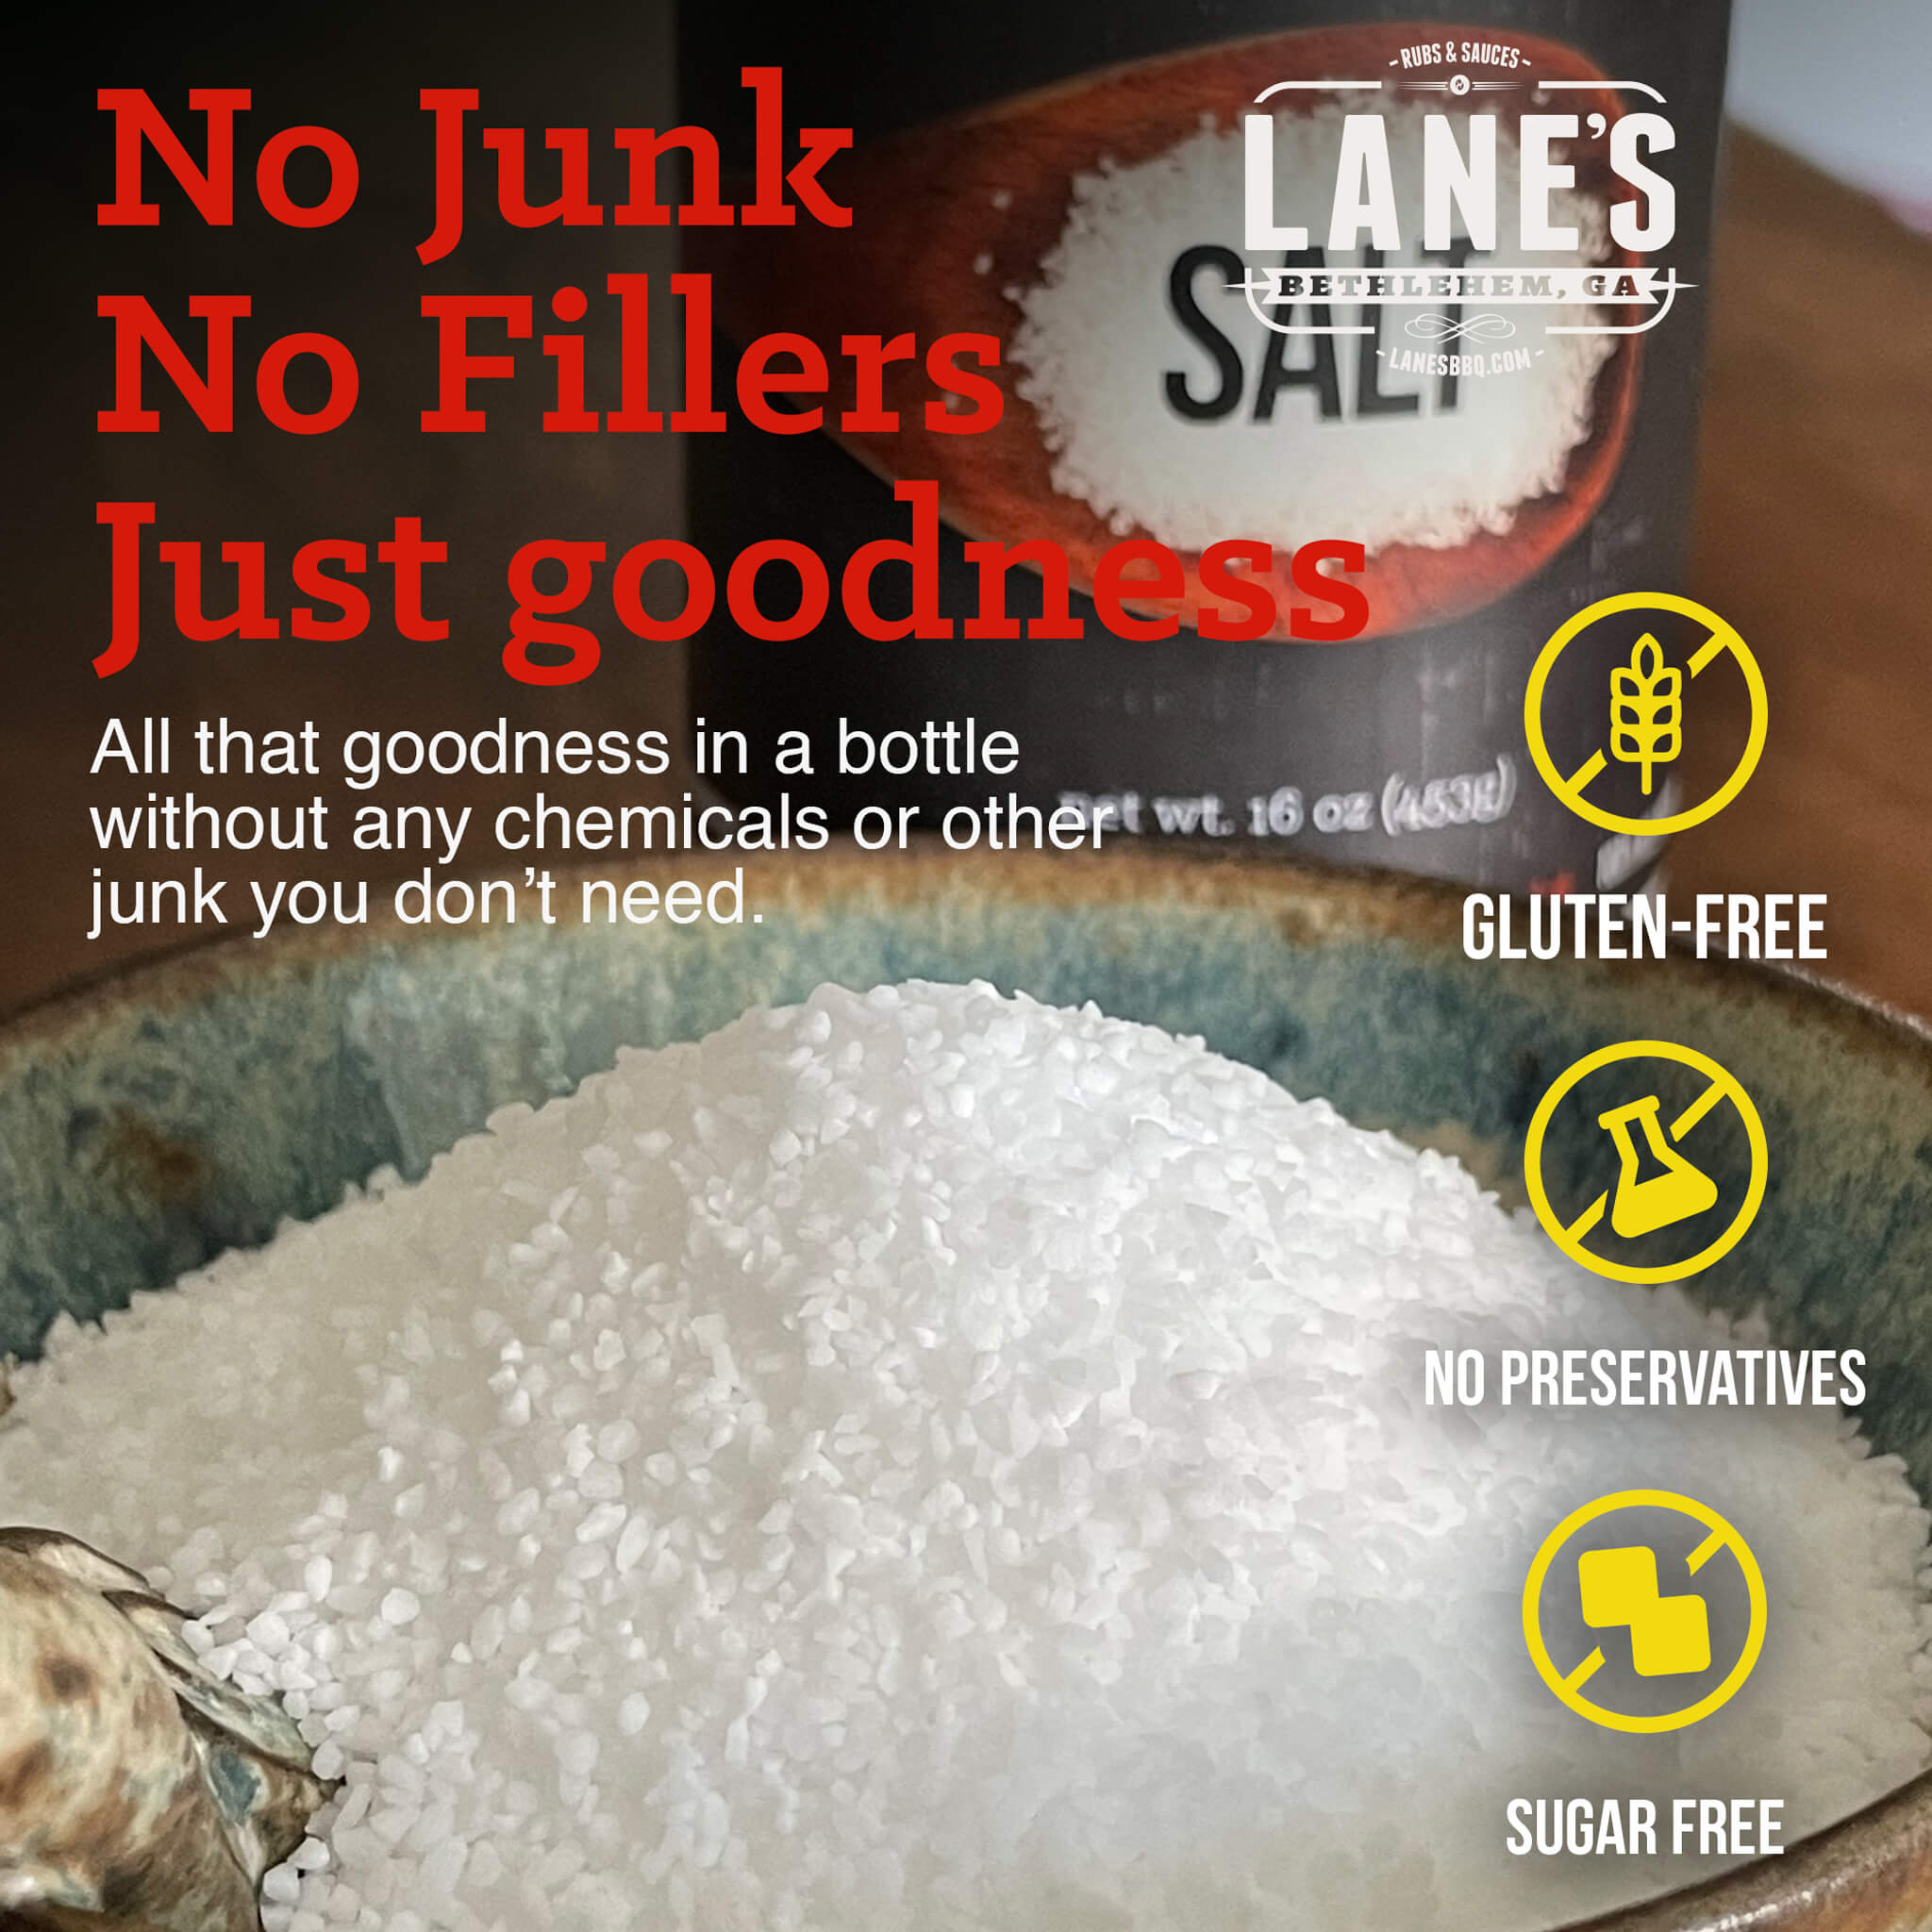  Lane's BBQ Salt and Pepper 50/50, Coarse Salt and 16 Mesh  Black Pepper, Bulk Spices, Gluten-Free